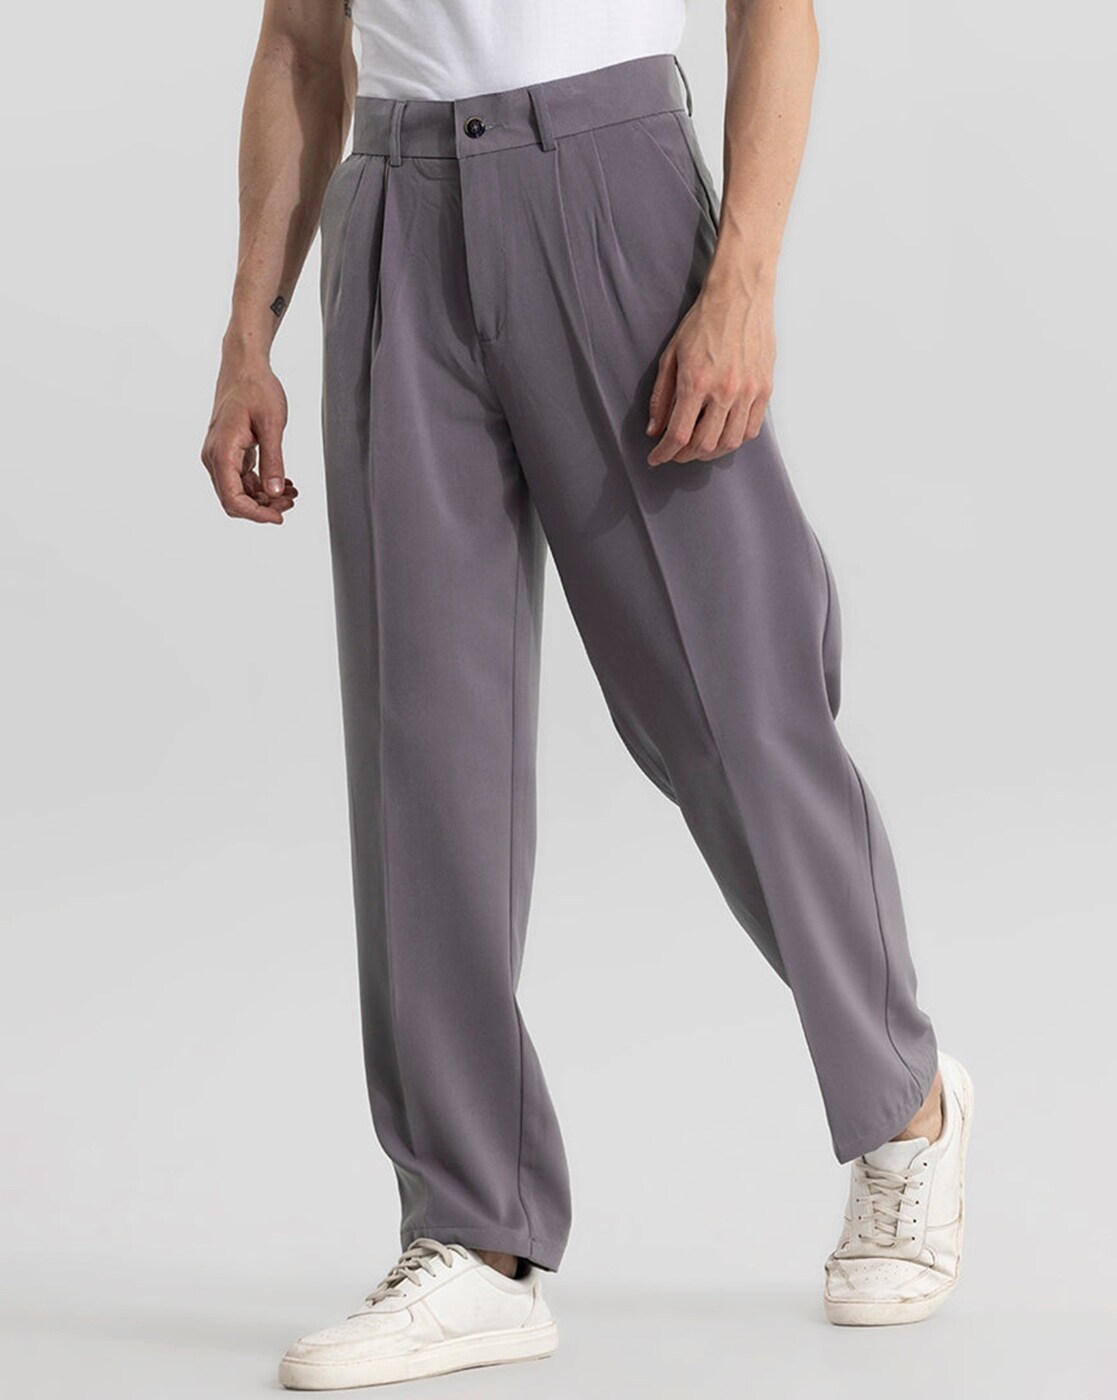 Men's Pleated Pants 12-24 pieces - High Performance Uniform Company